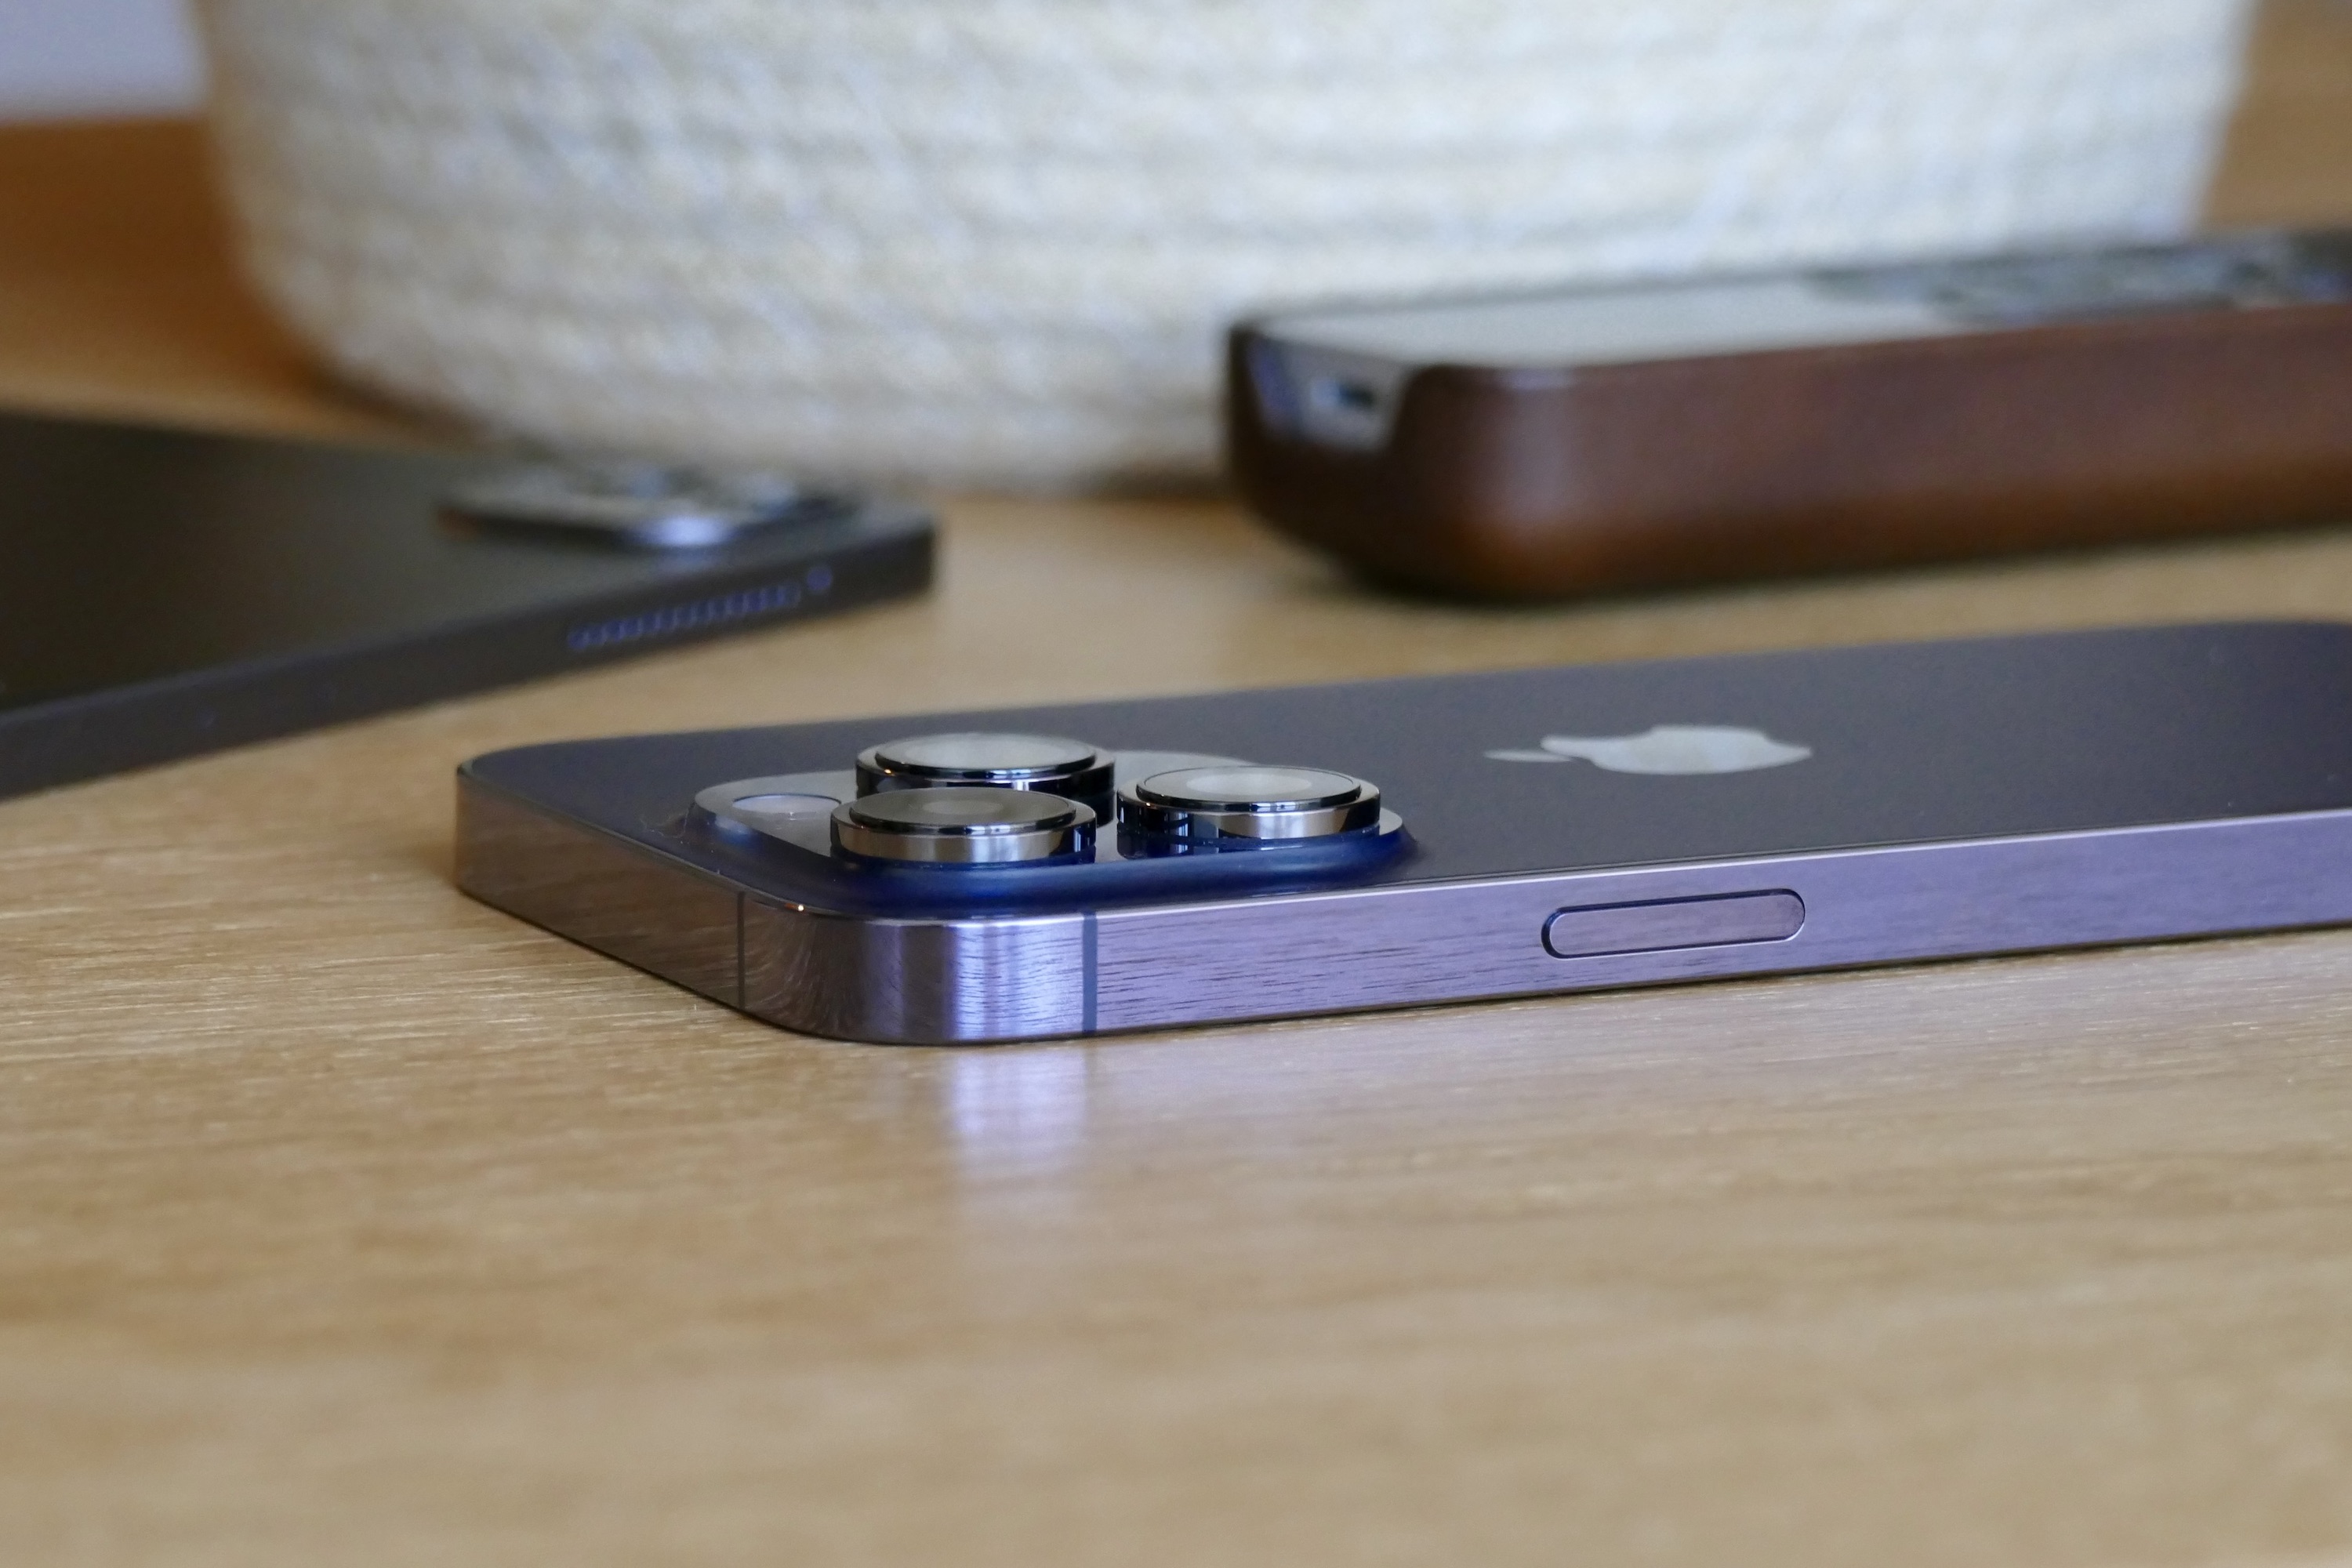 The iPhone 14 Pro's camera module.